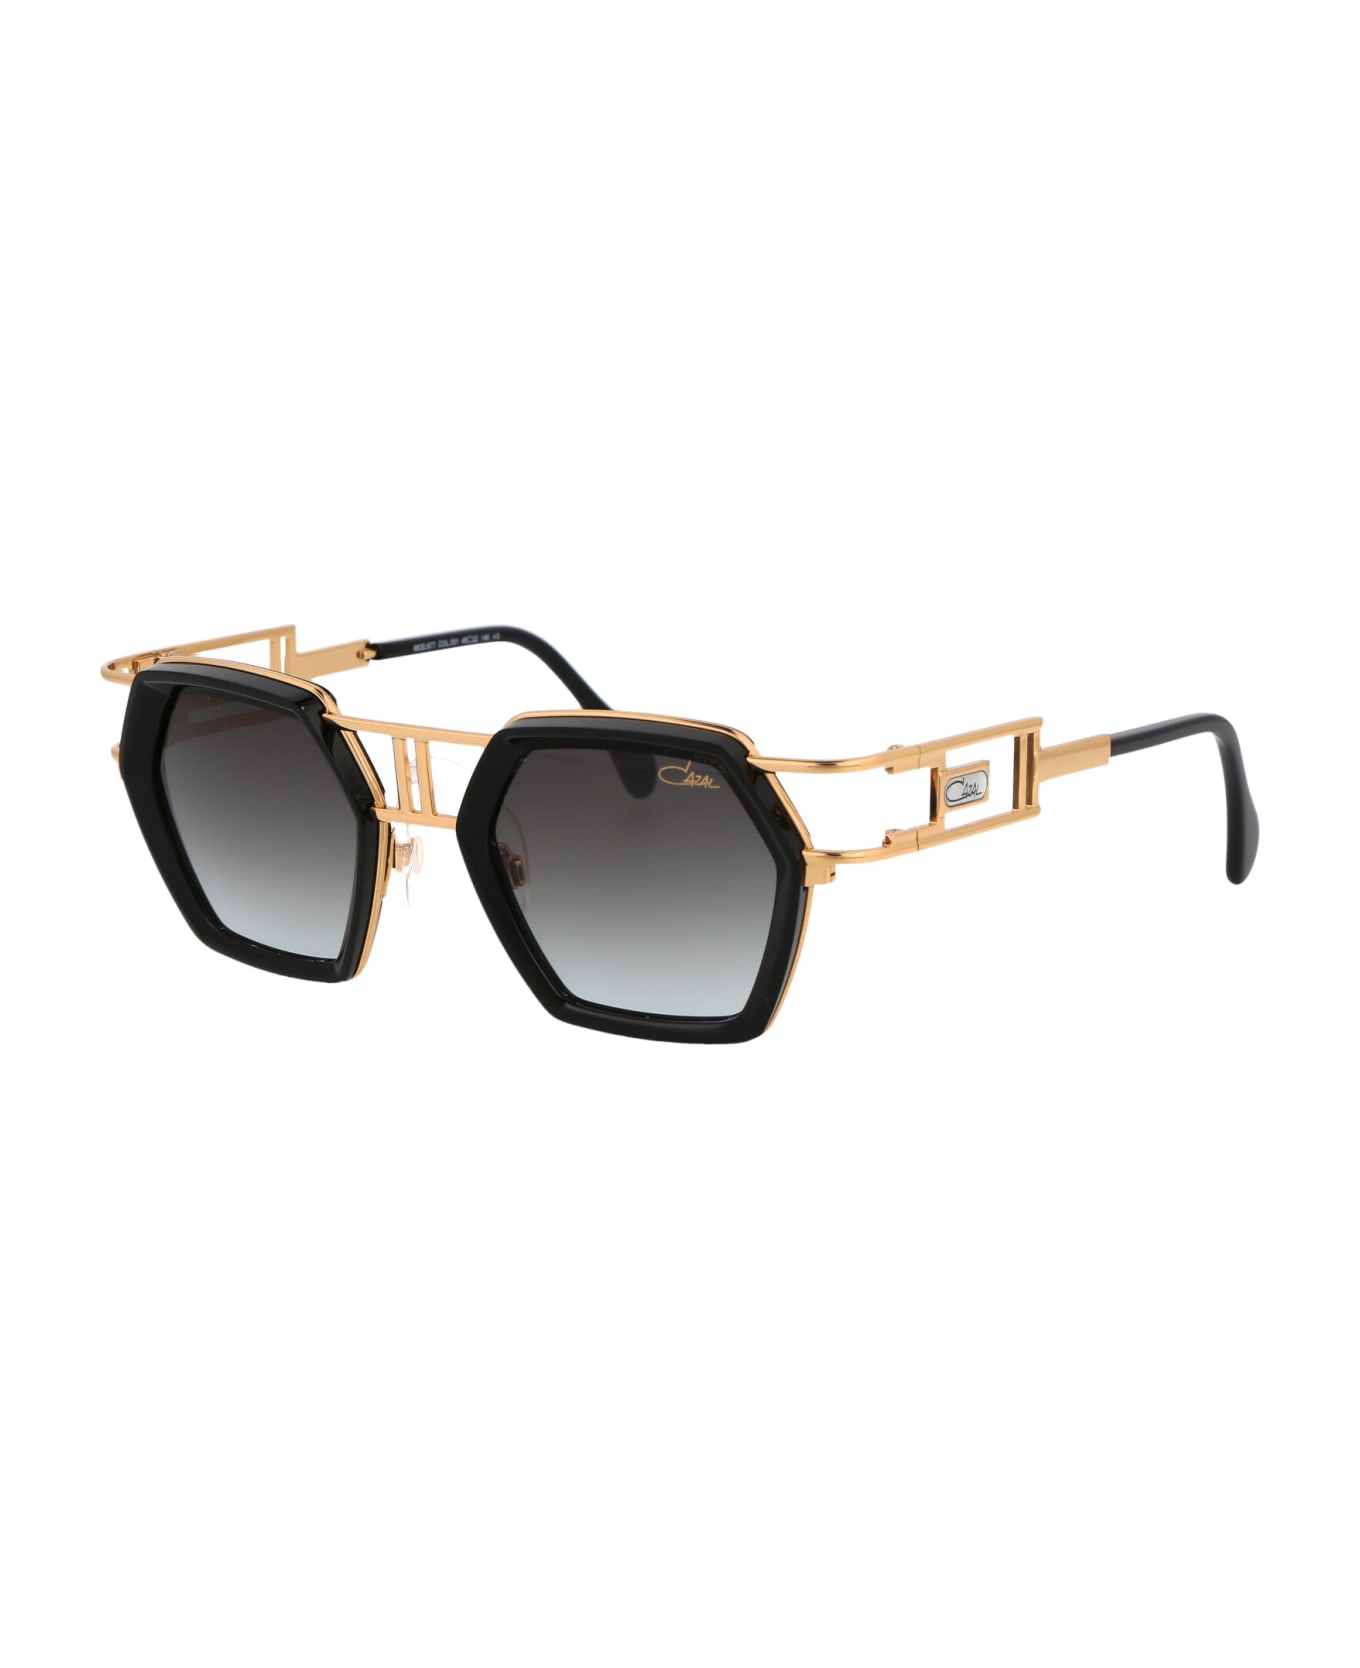 Cazal Mod. 677 Split Sunglasses - 001 BLACK